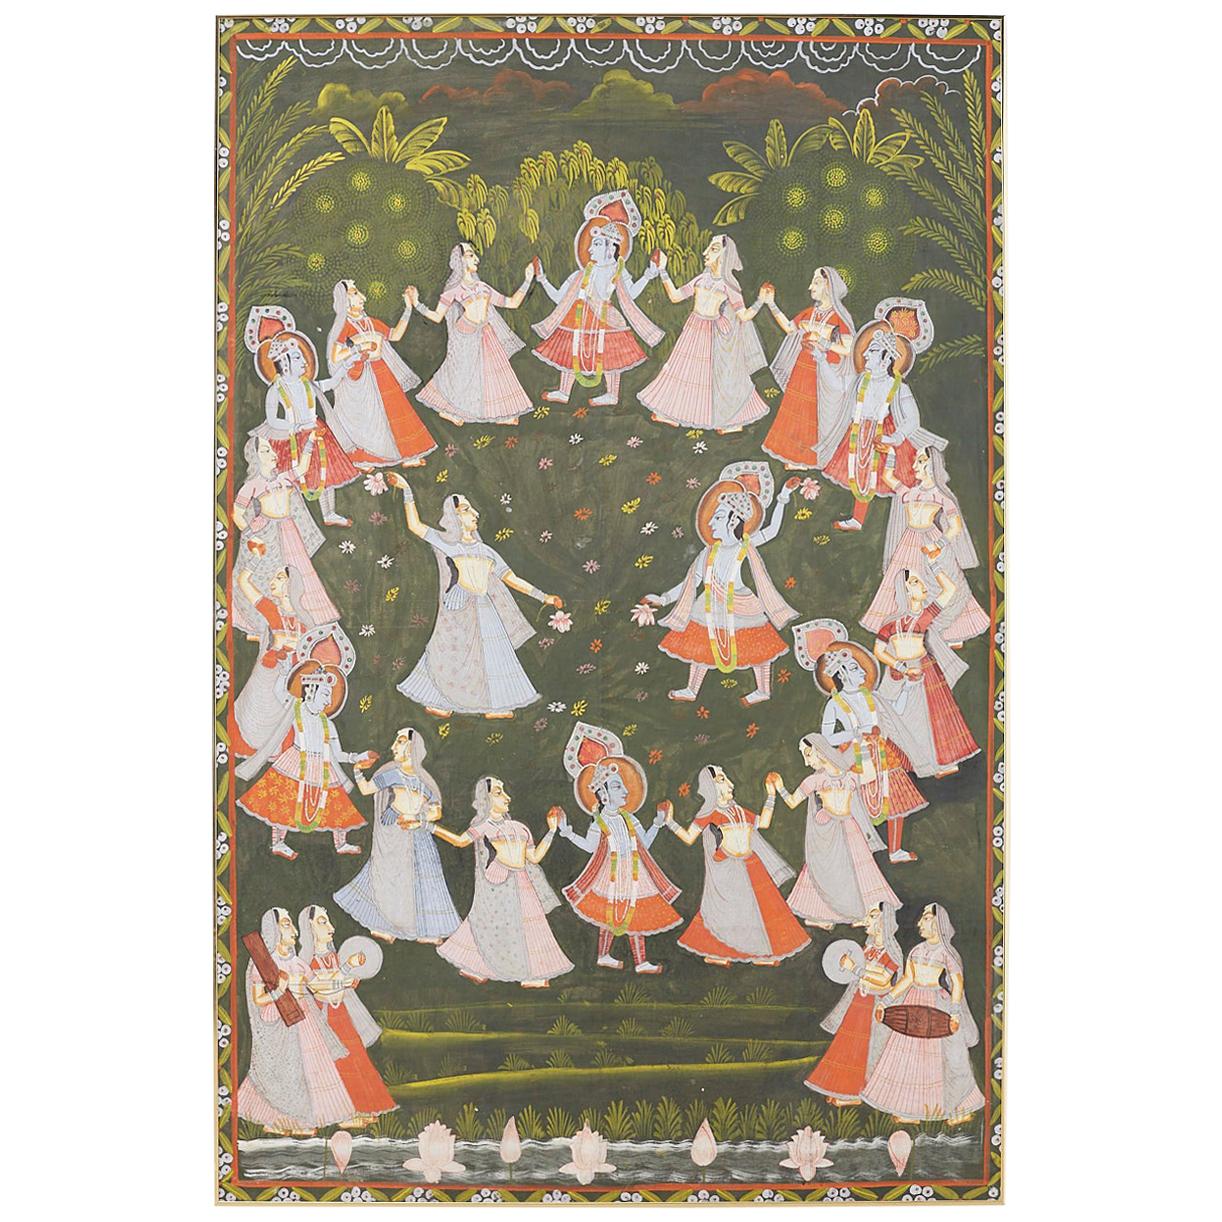 Pichhwai Hindu Painting of Krishna with Dancing Gopis